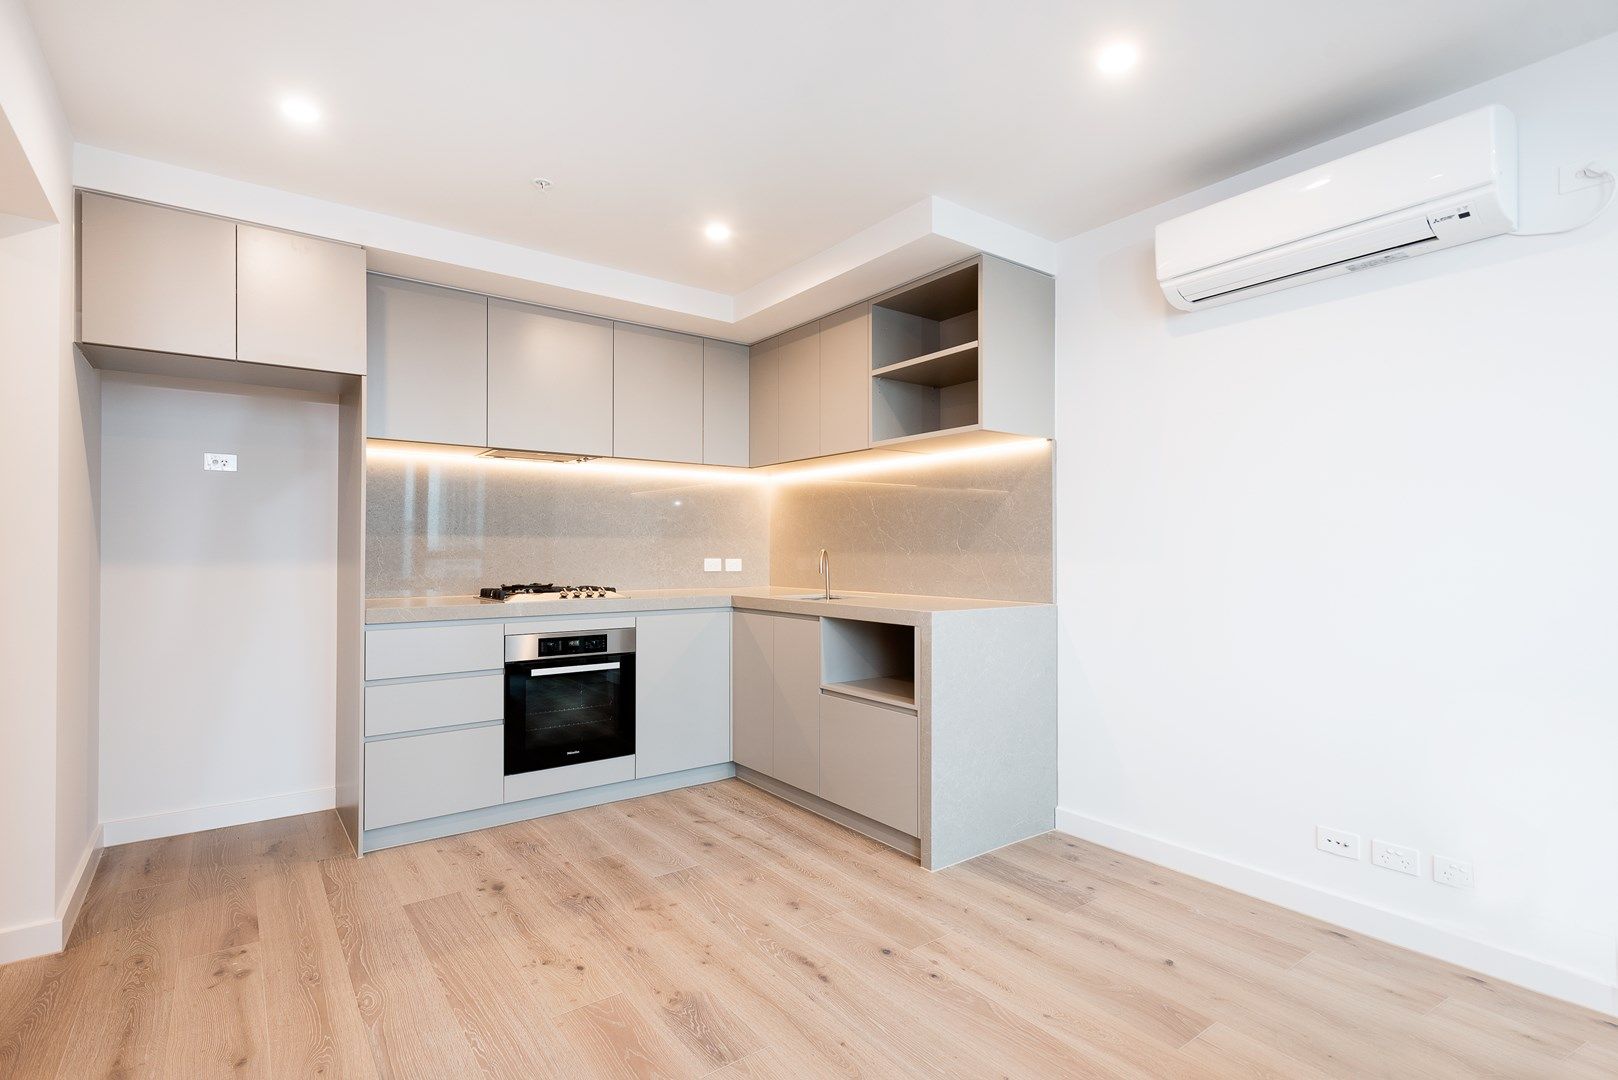 2 bedrooms Apartment / Unit / Flat in 3904/371 Little Lonsdale Street MELBOURNE VIC, 3000